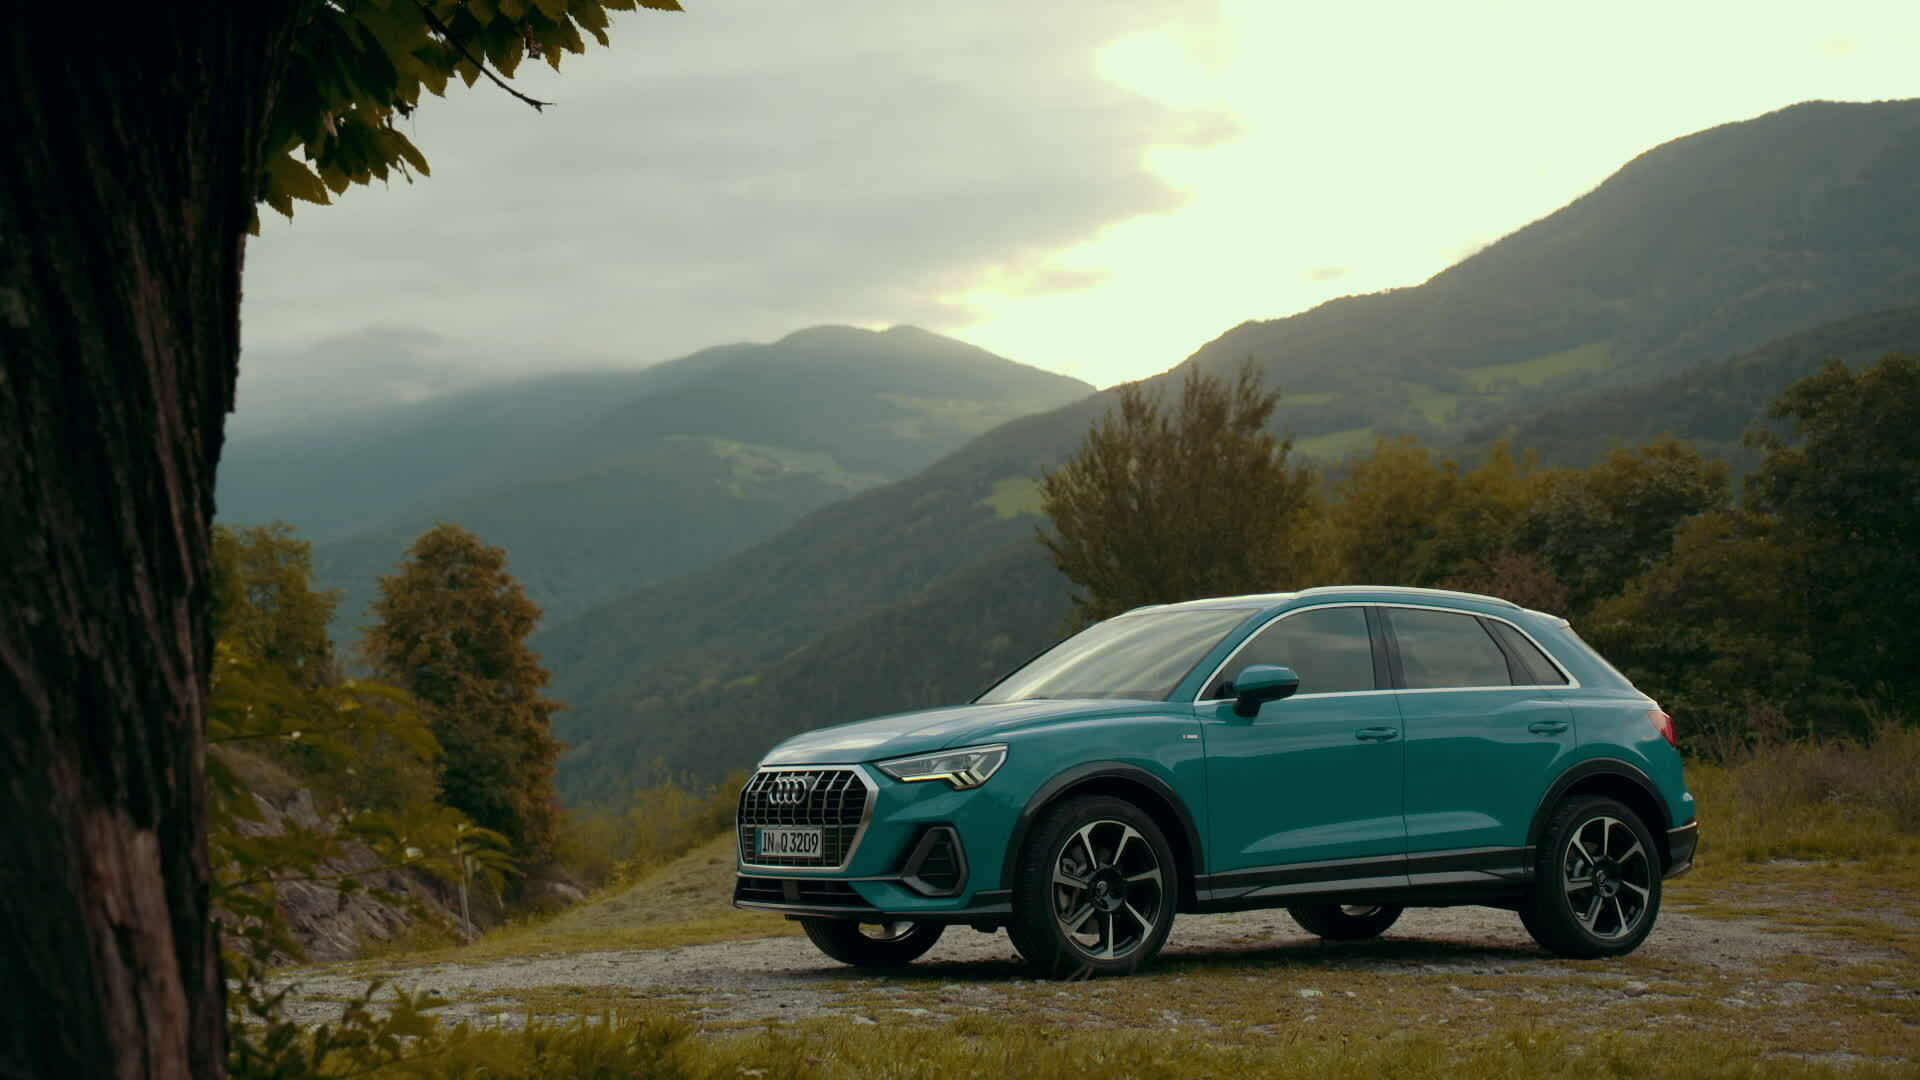 Audi Q3 Trailer on Location Bolzano